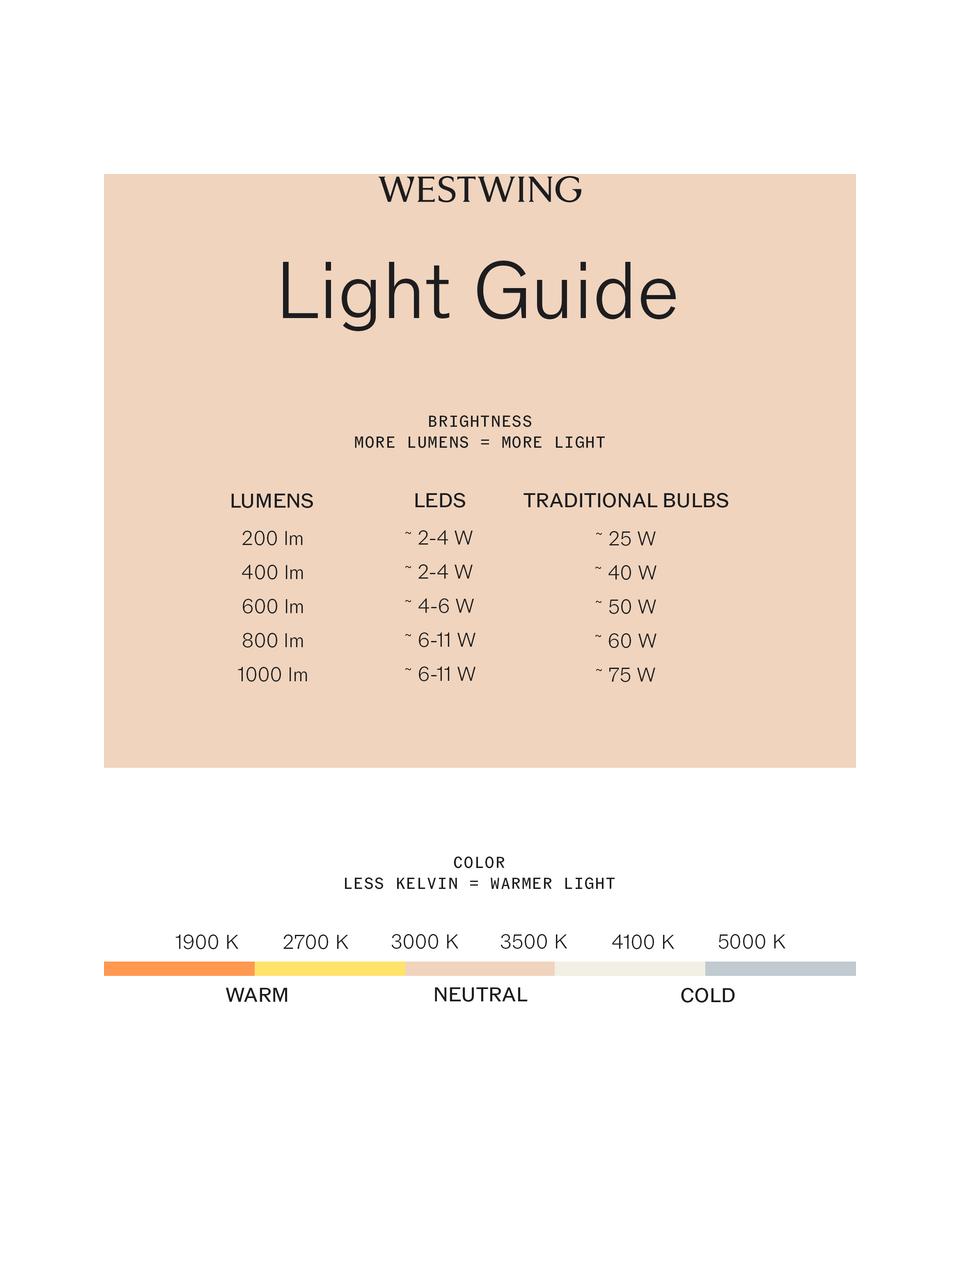 Dimmbare LED-Tischlampe Taccia, Lampenschirm: Kunststoff, Schwarz, Weiß, Ø 50 x H 65 cm